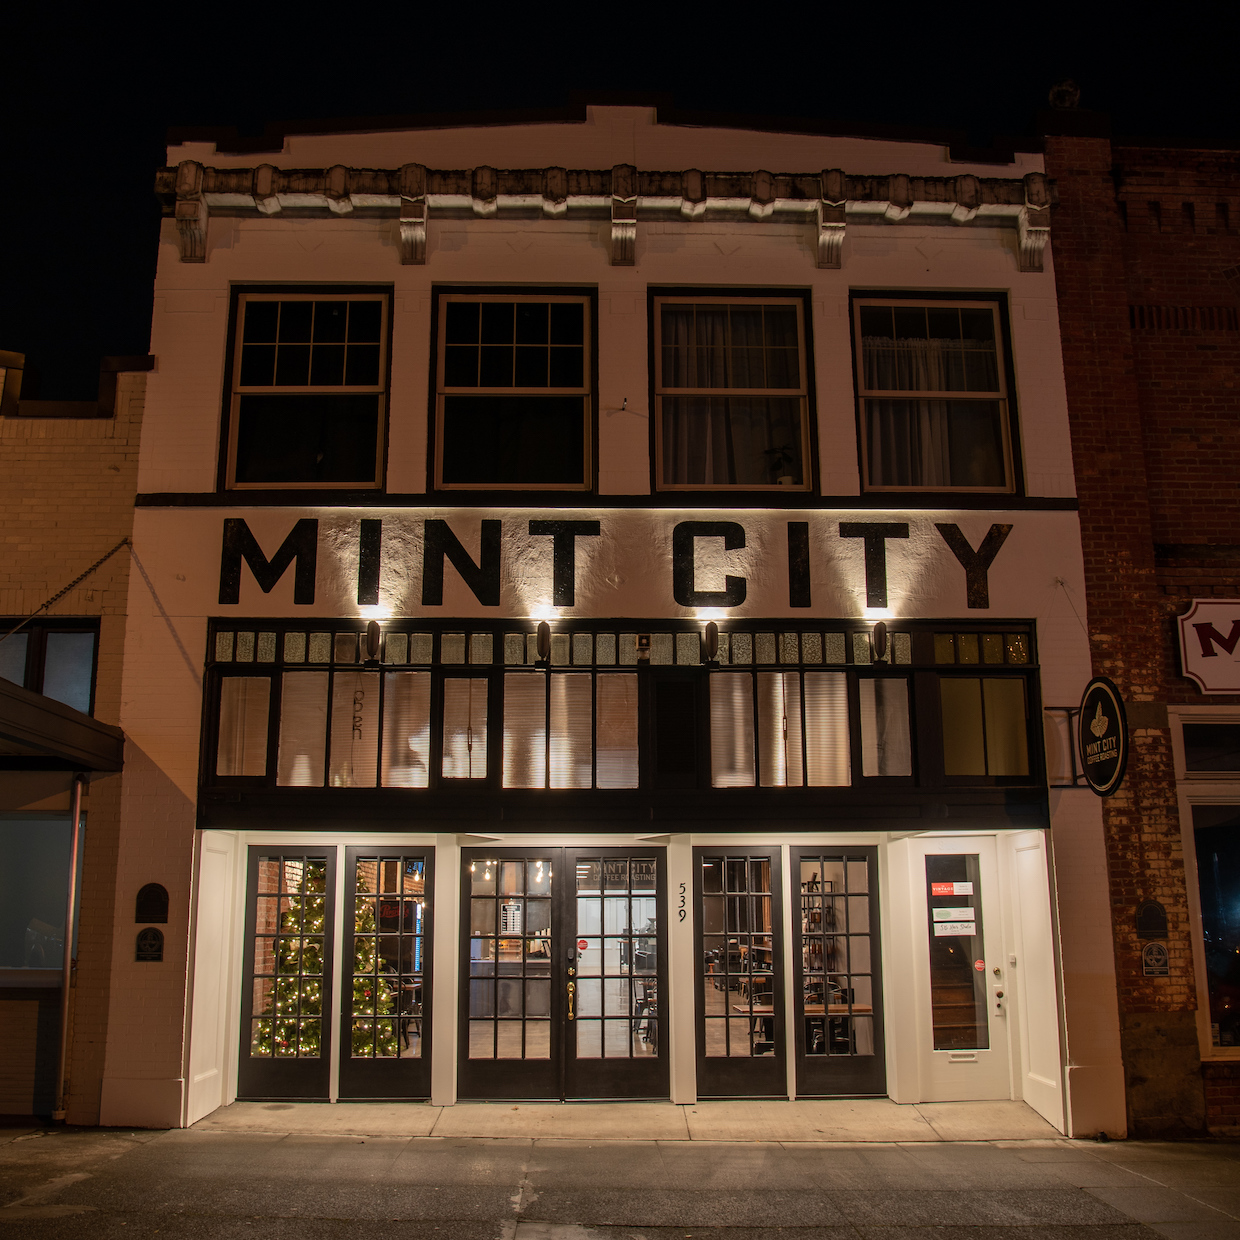 Mint City evening